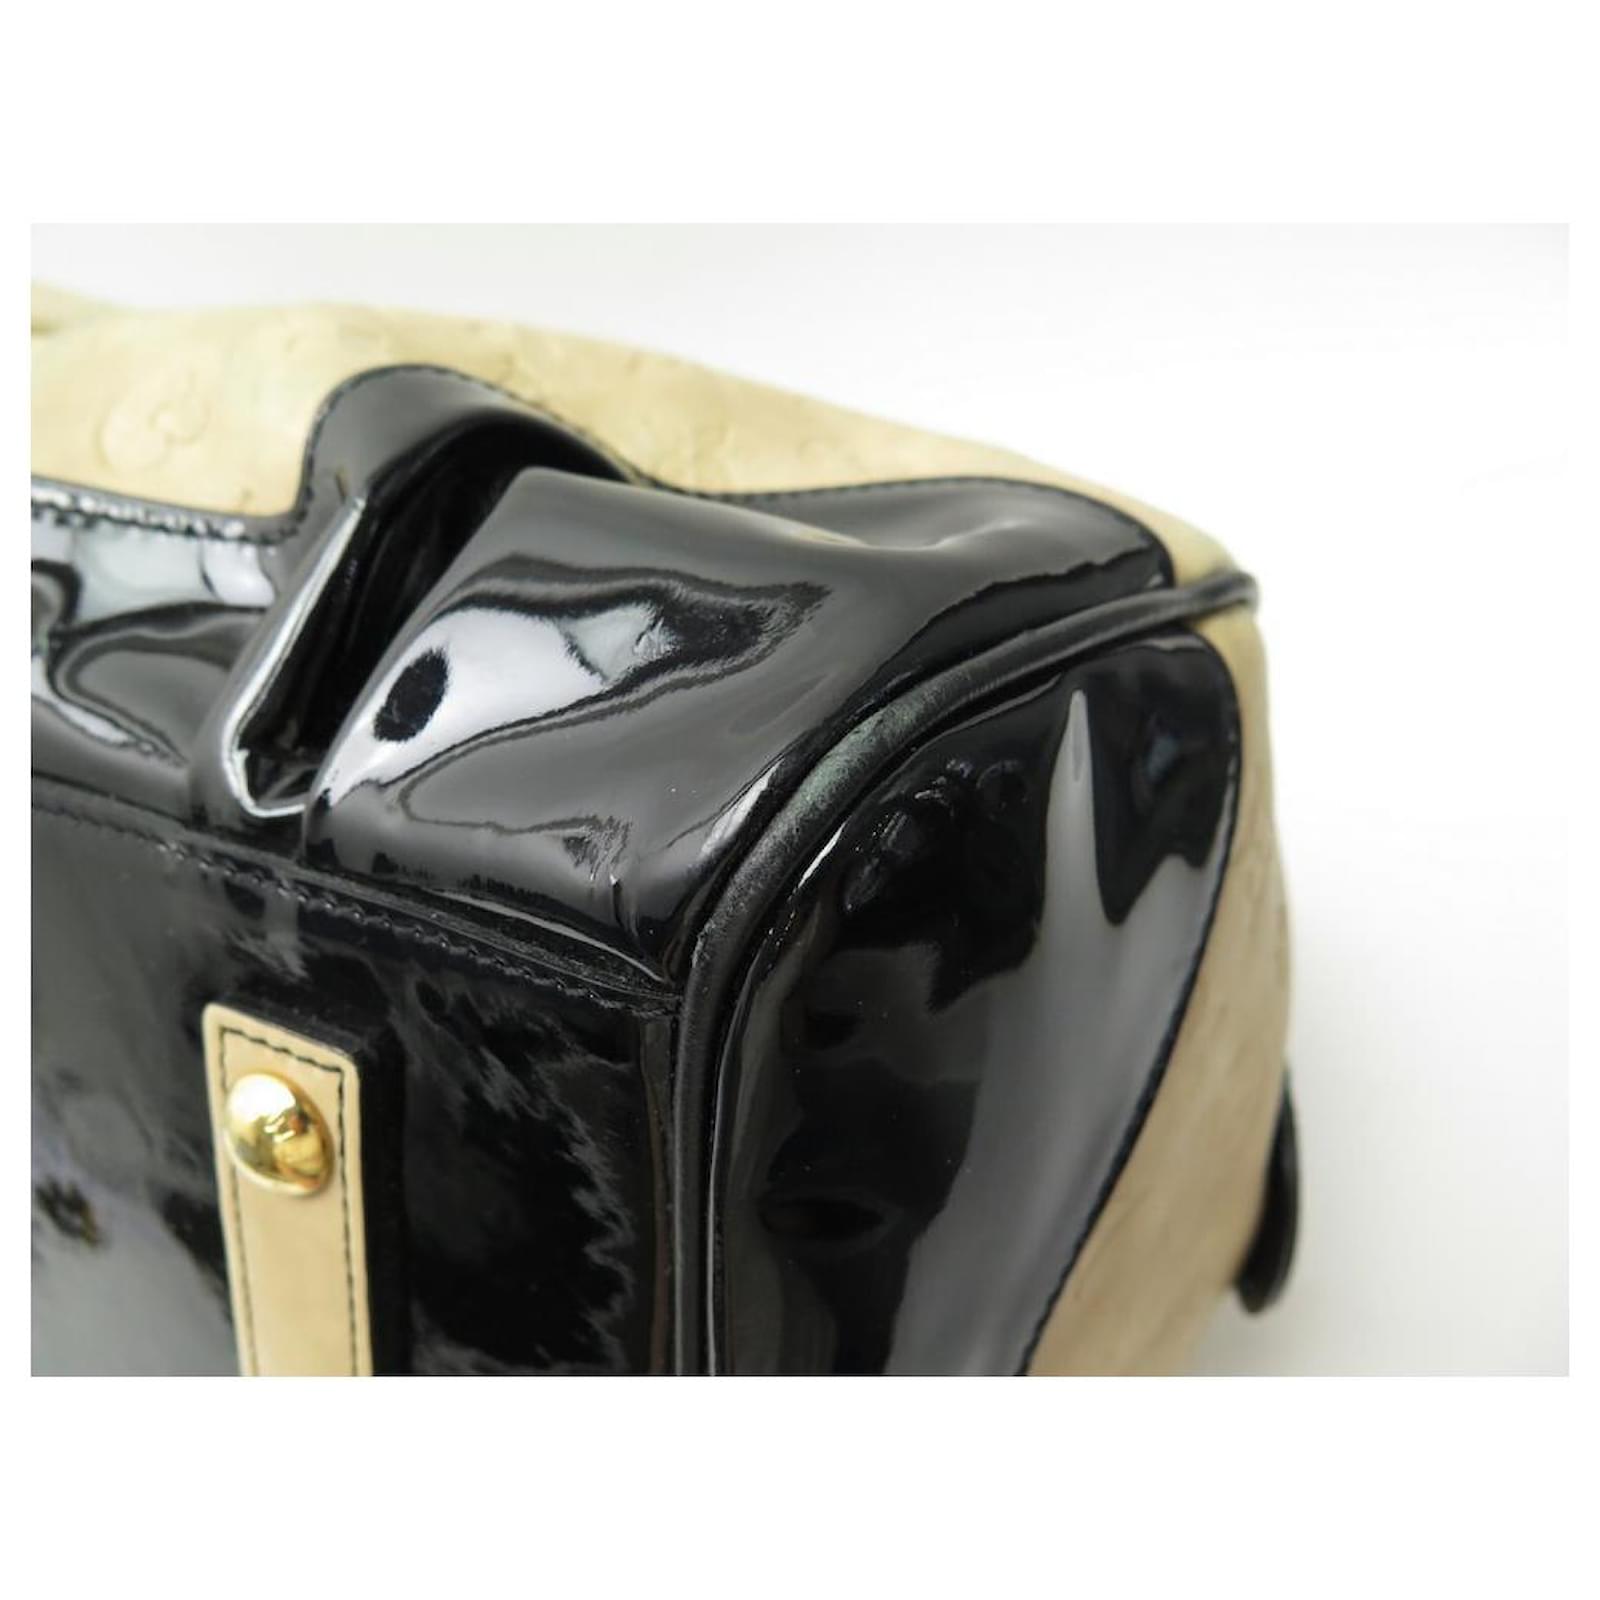 Stephen sprouse boston leather handbag Louis Vuitton Black in